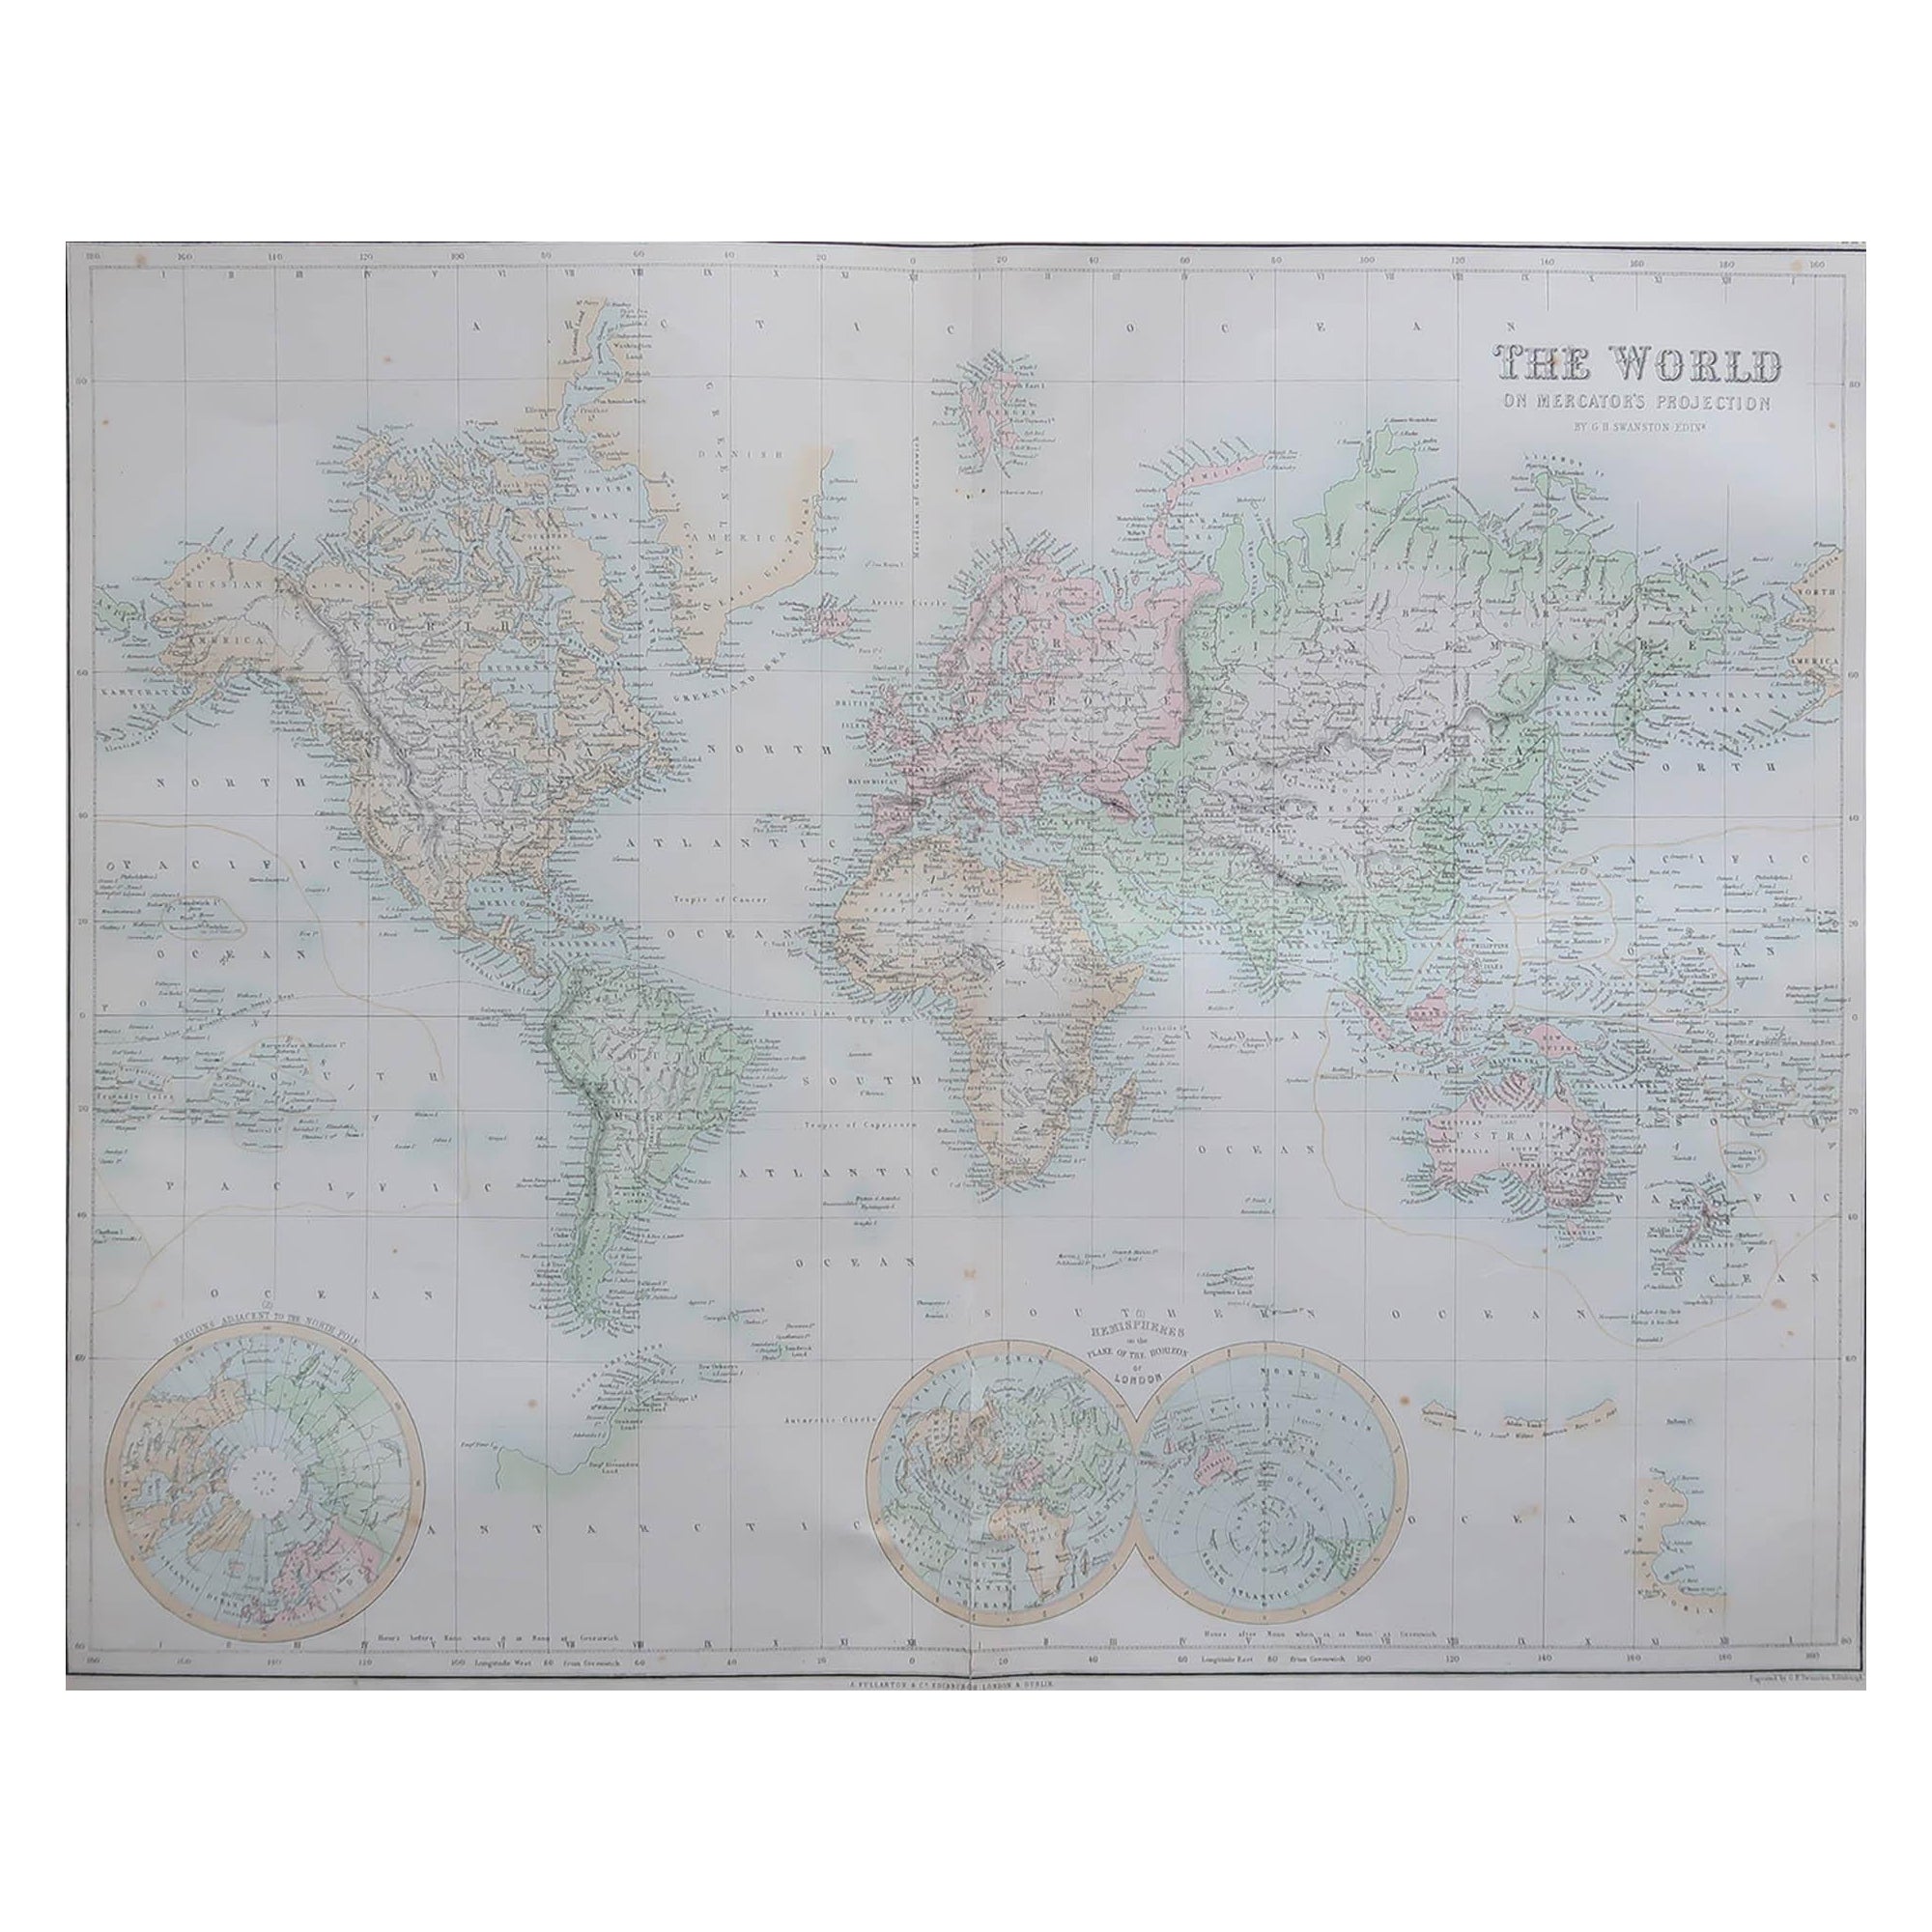 Große original antike Weltkarte, Fullarton, um 1870